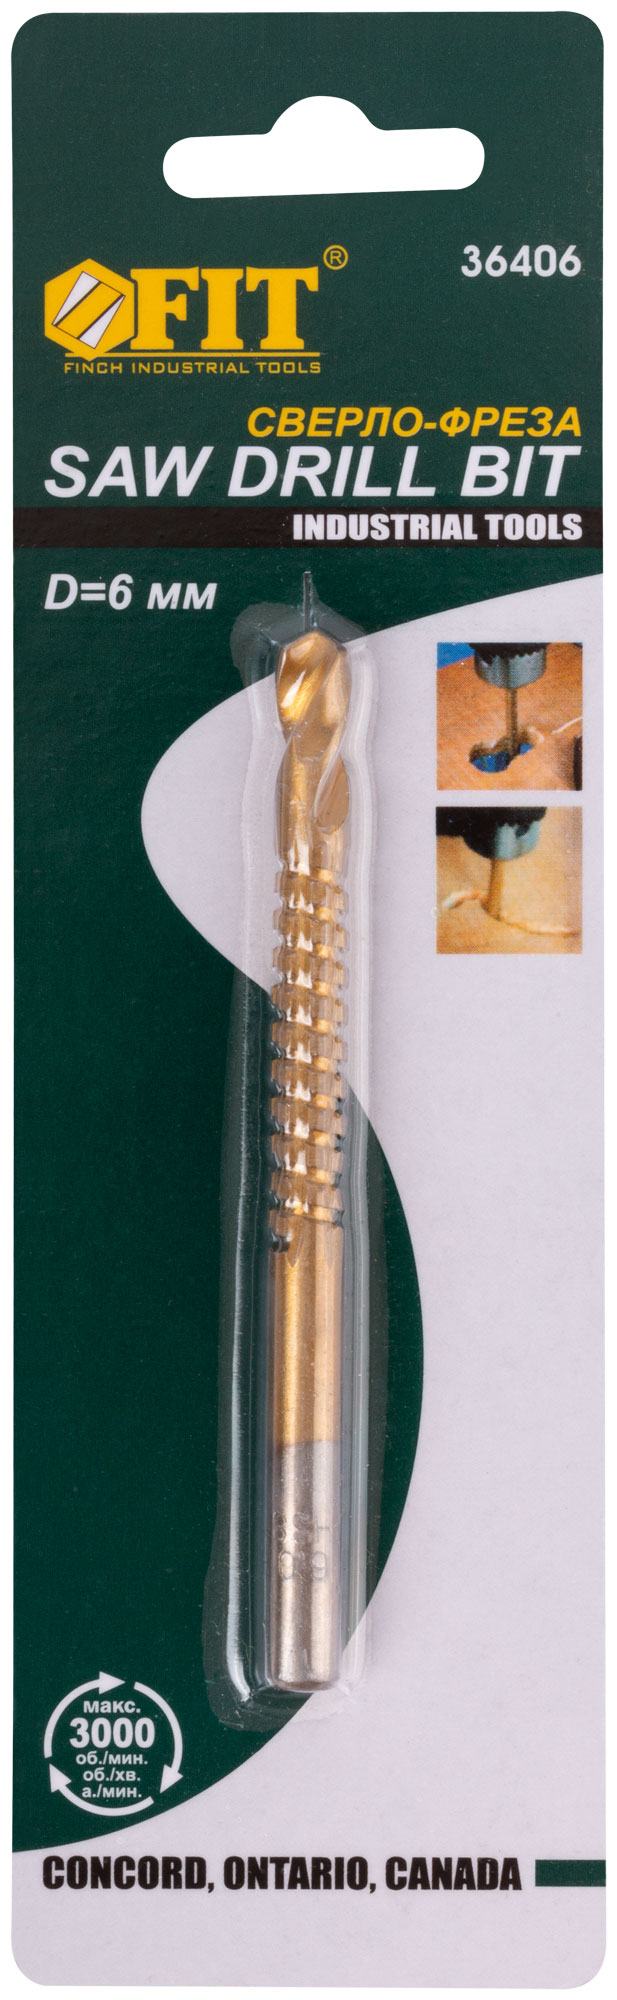 Сверло-фреза универсальное 6 мм. FIT 36406 универсальное крепление на для ножа